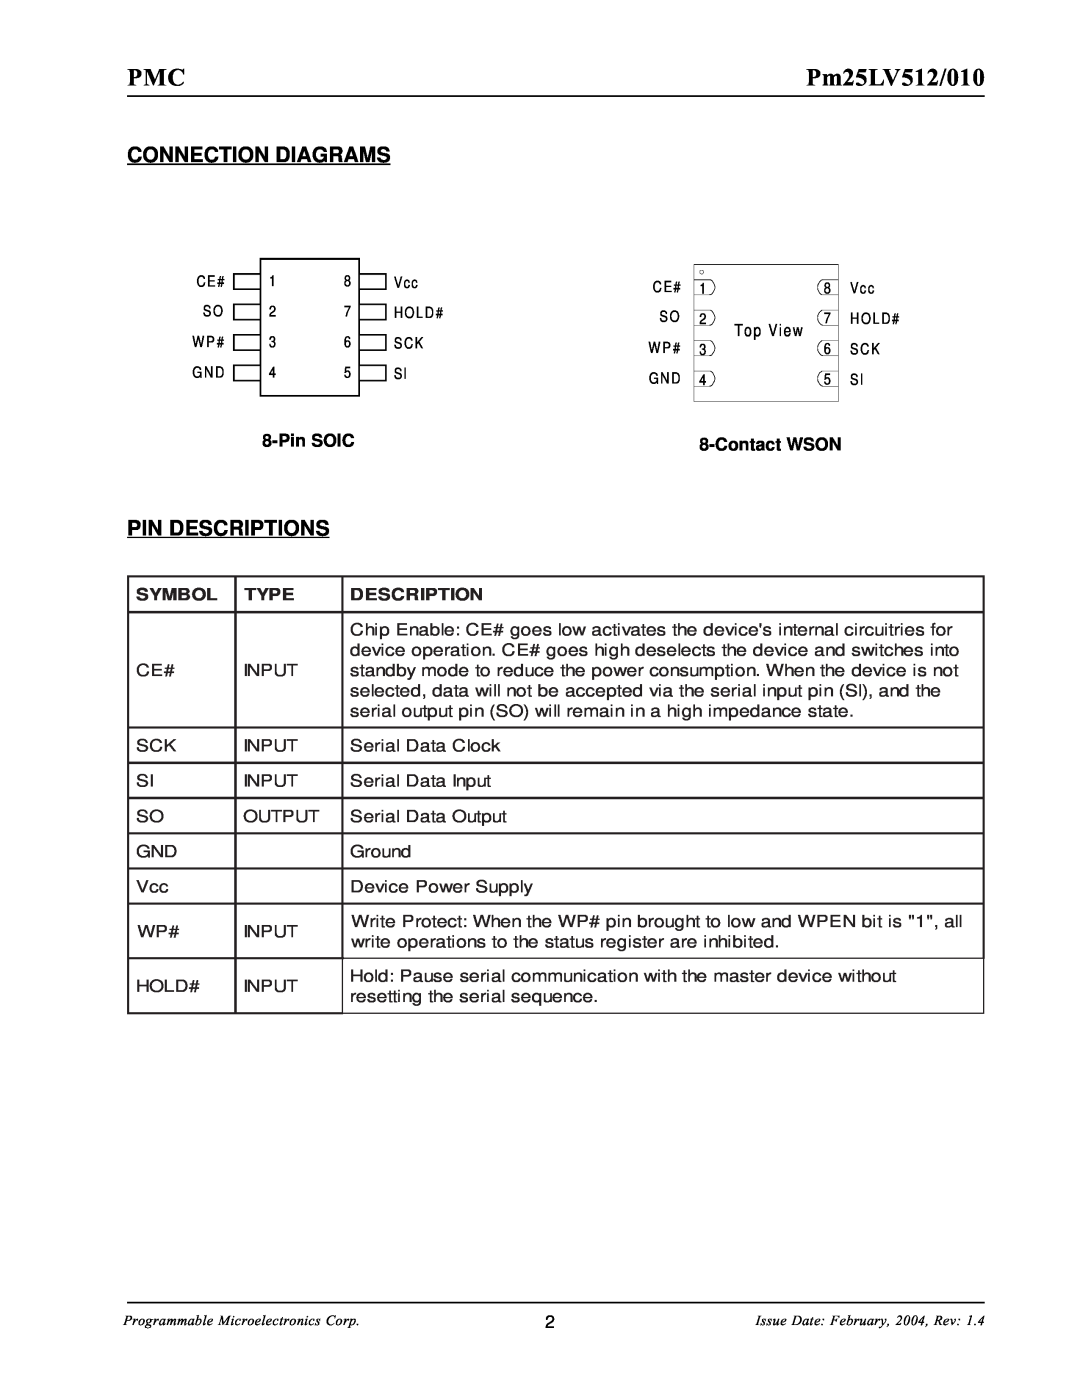 PMC-Sierra Pm25LV010 manual Pm25LV512/010, Connection Diagrams, Pin Descriptions 